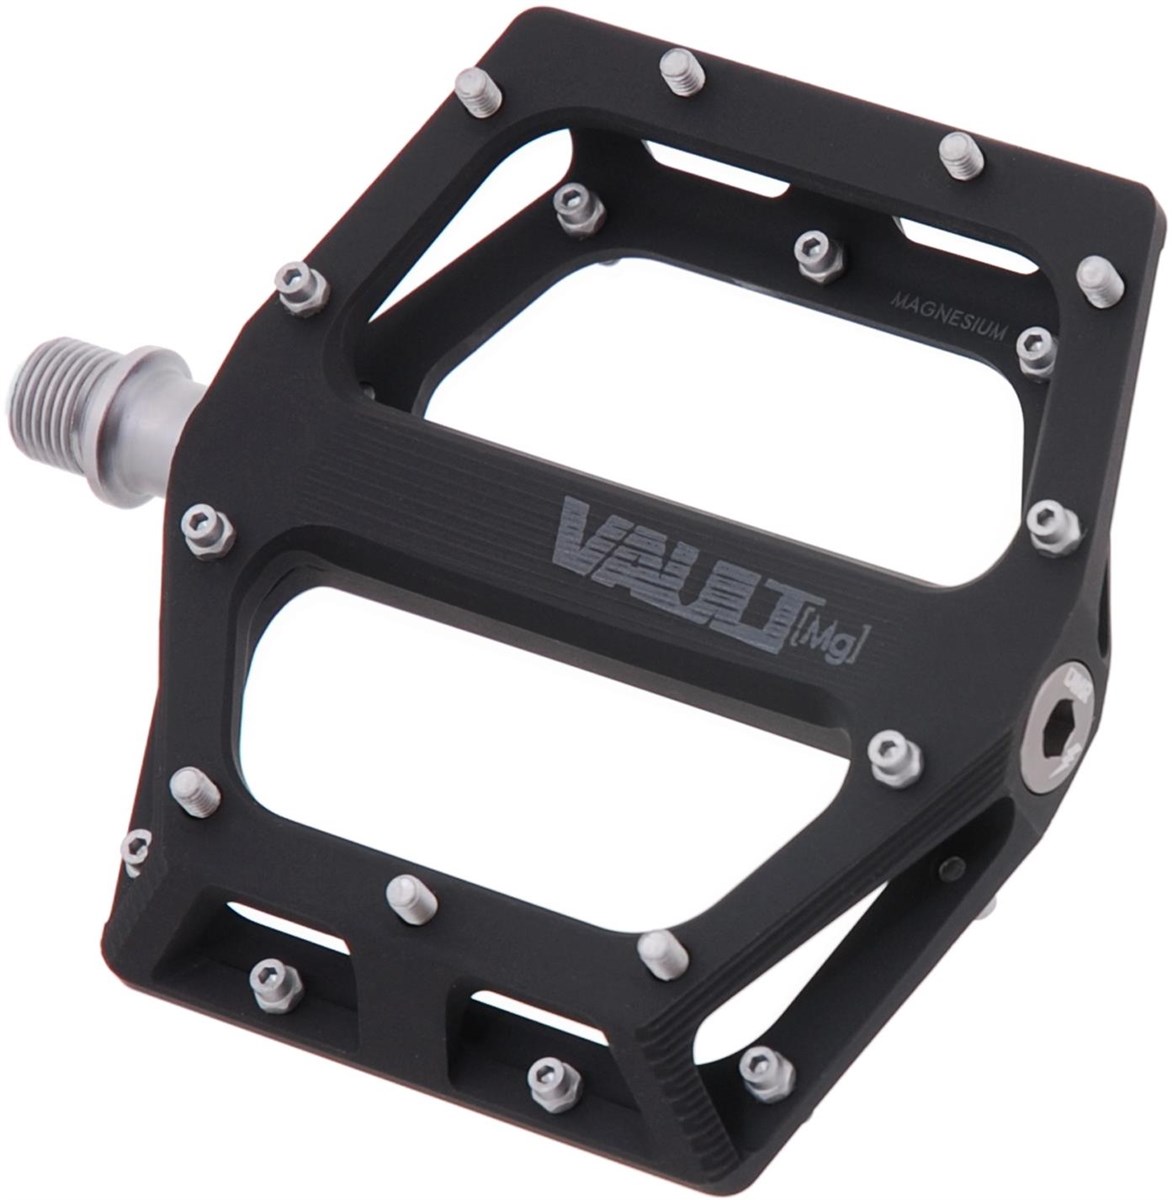 DMR Vault Magnesium Pedals product image